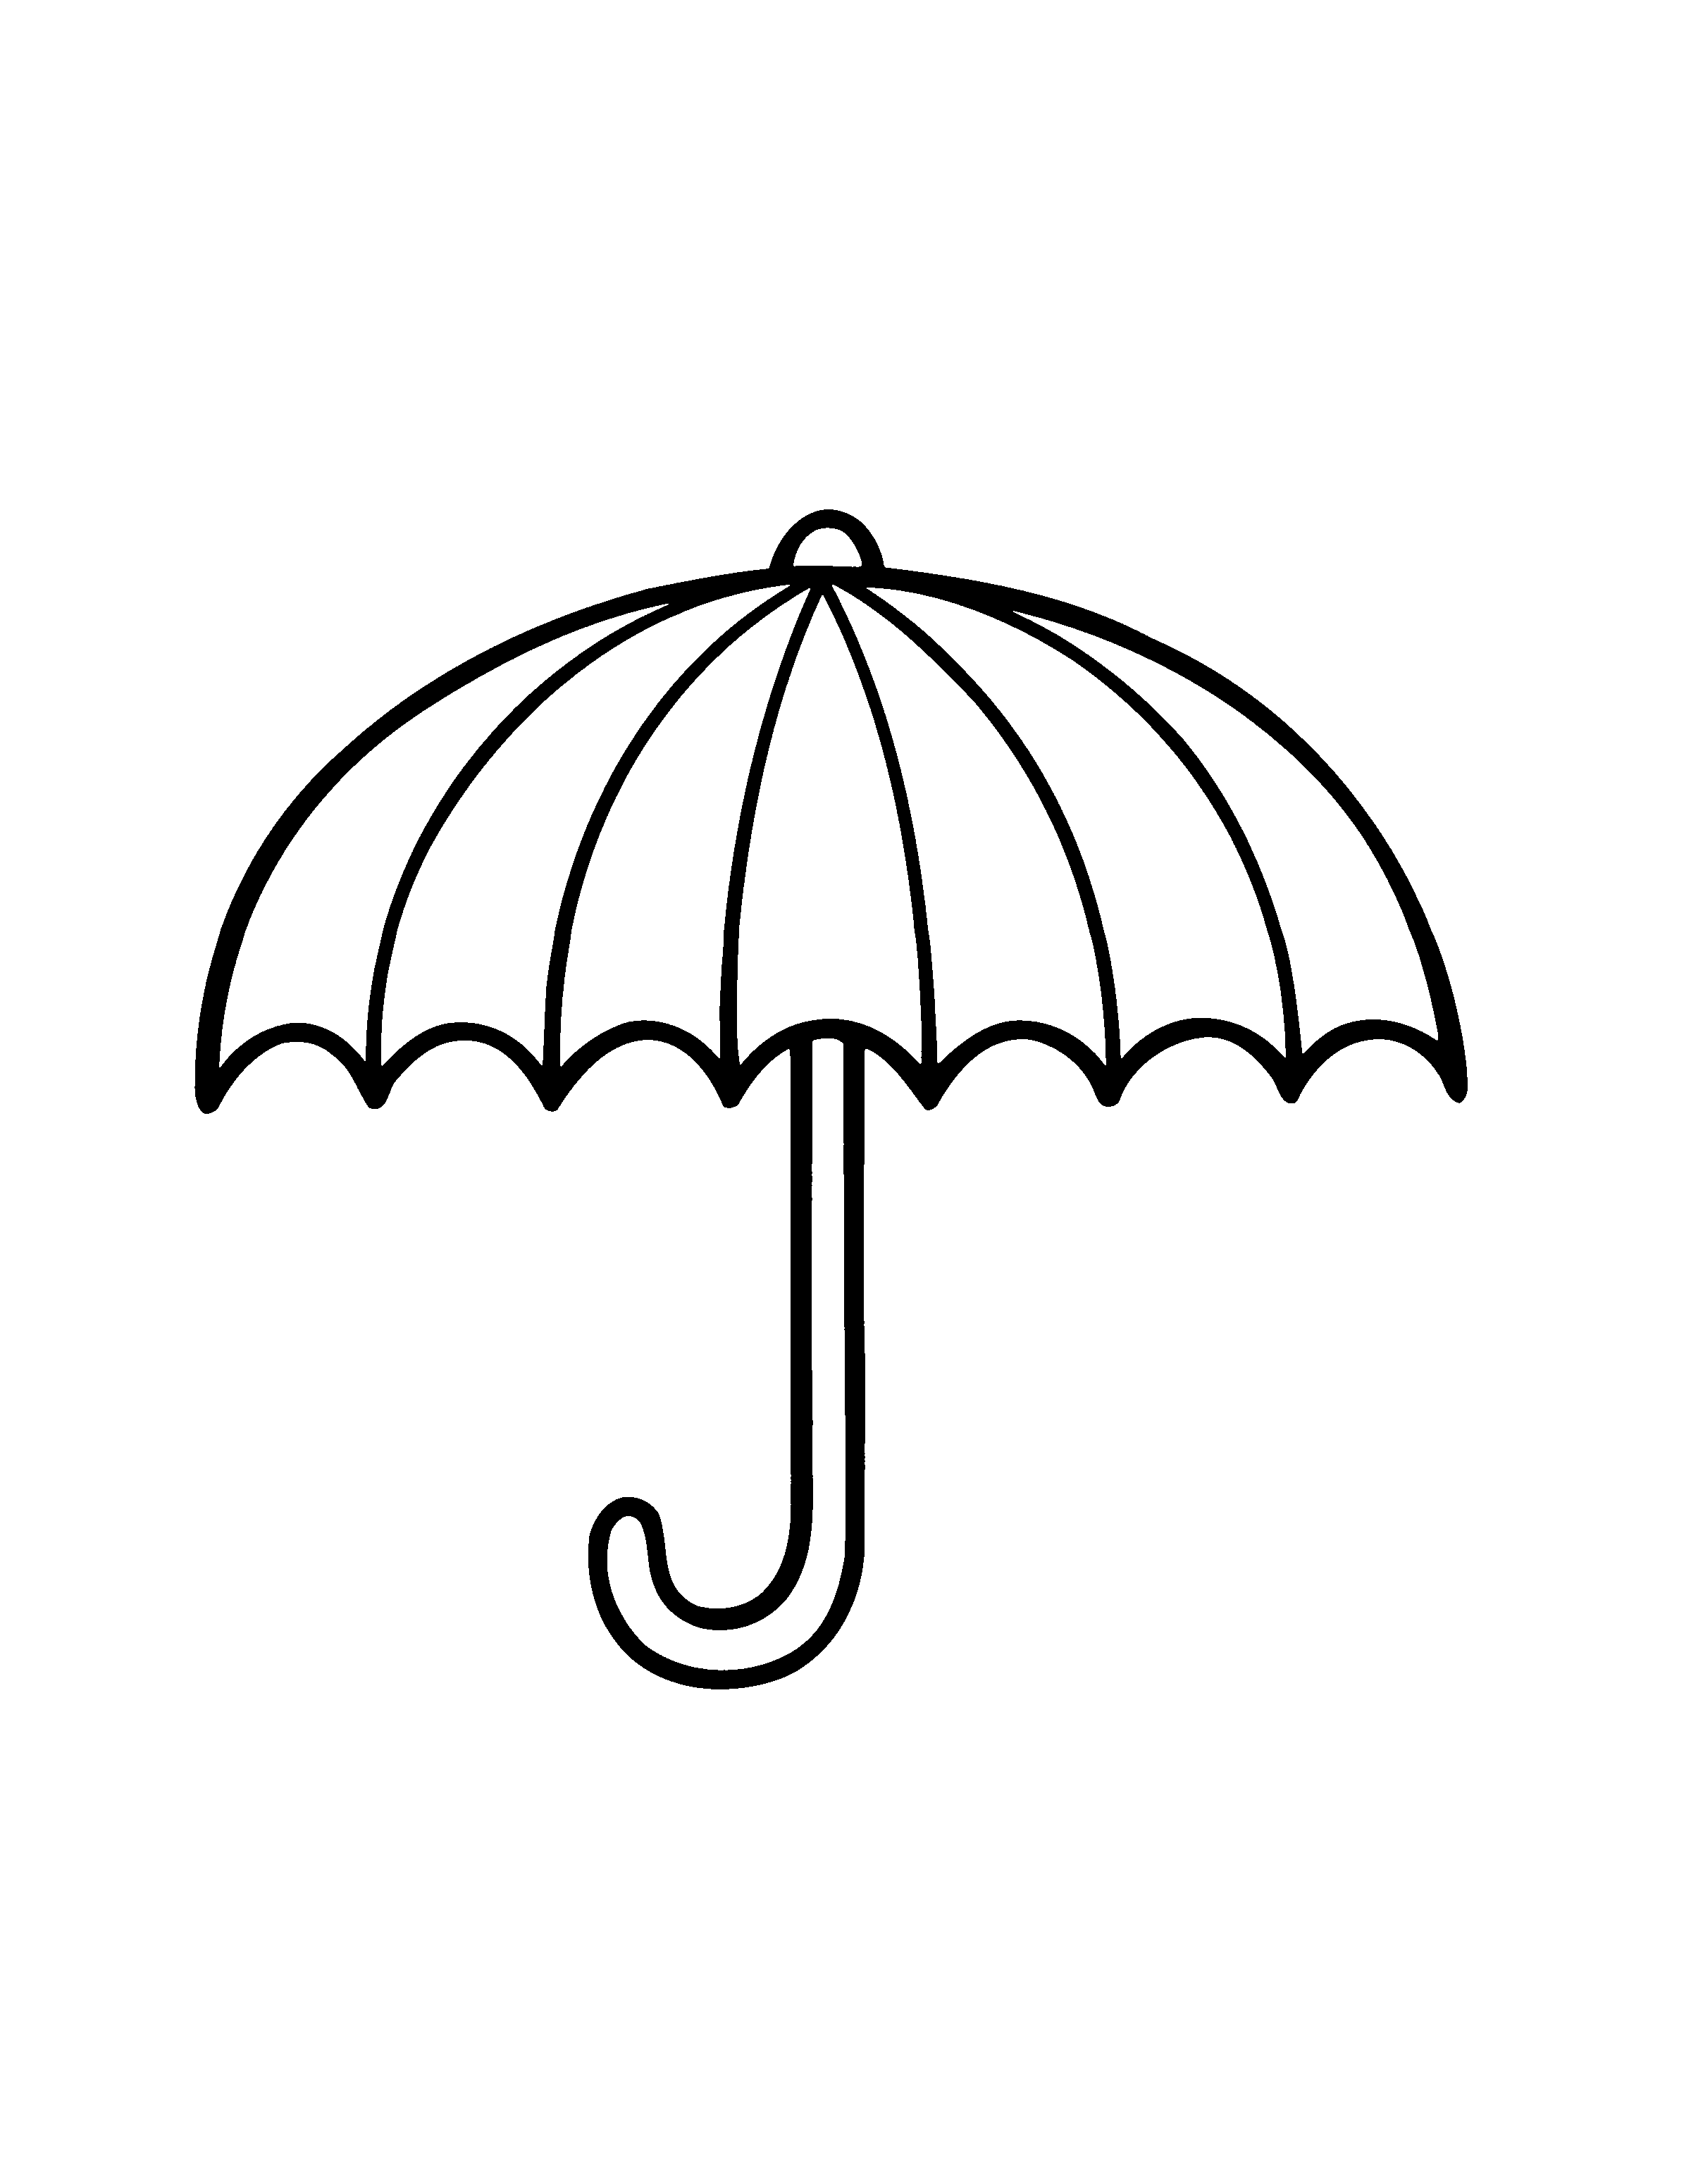 Umbrella Drawing Images